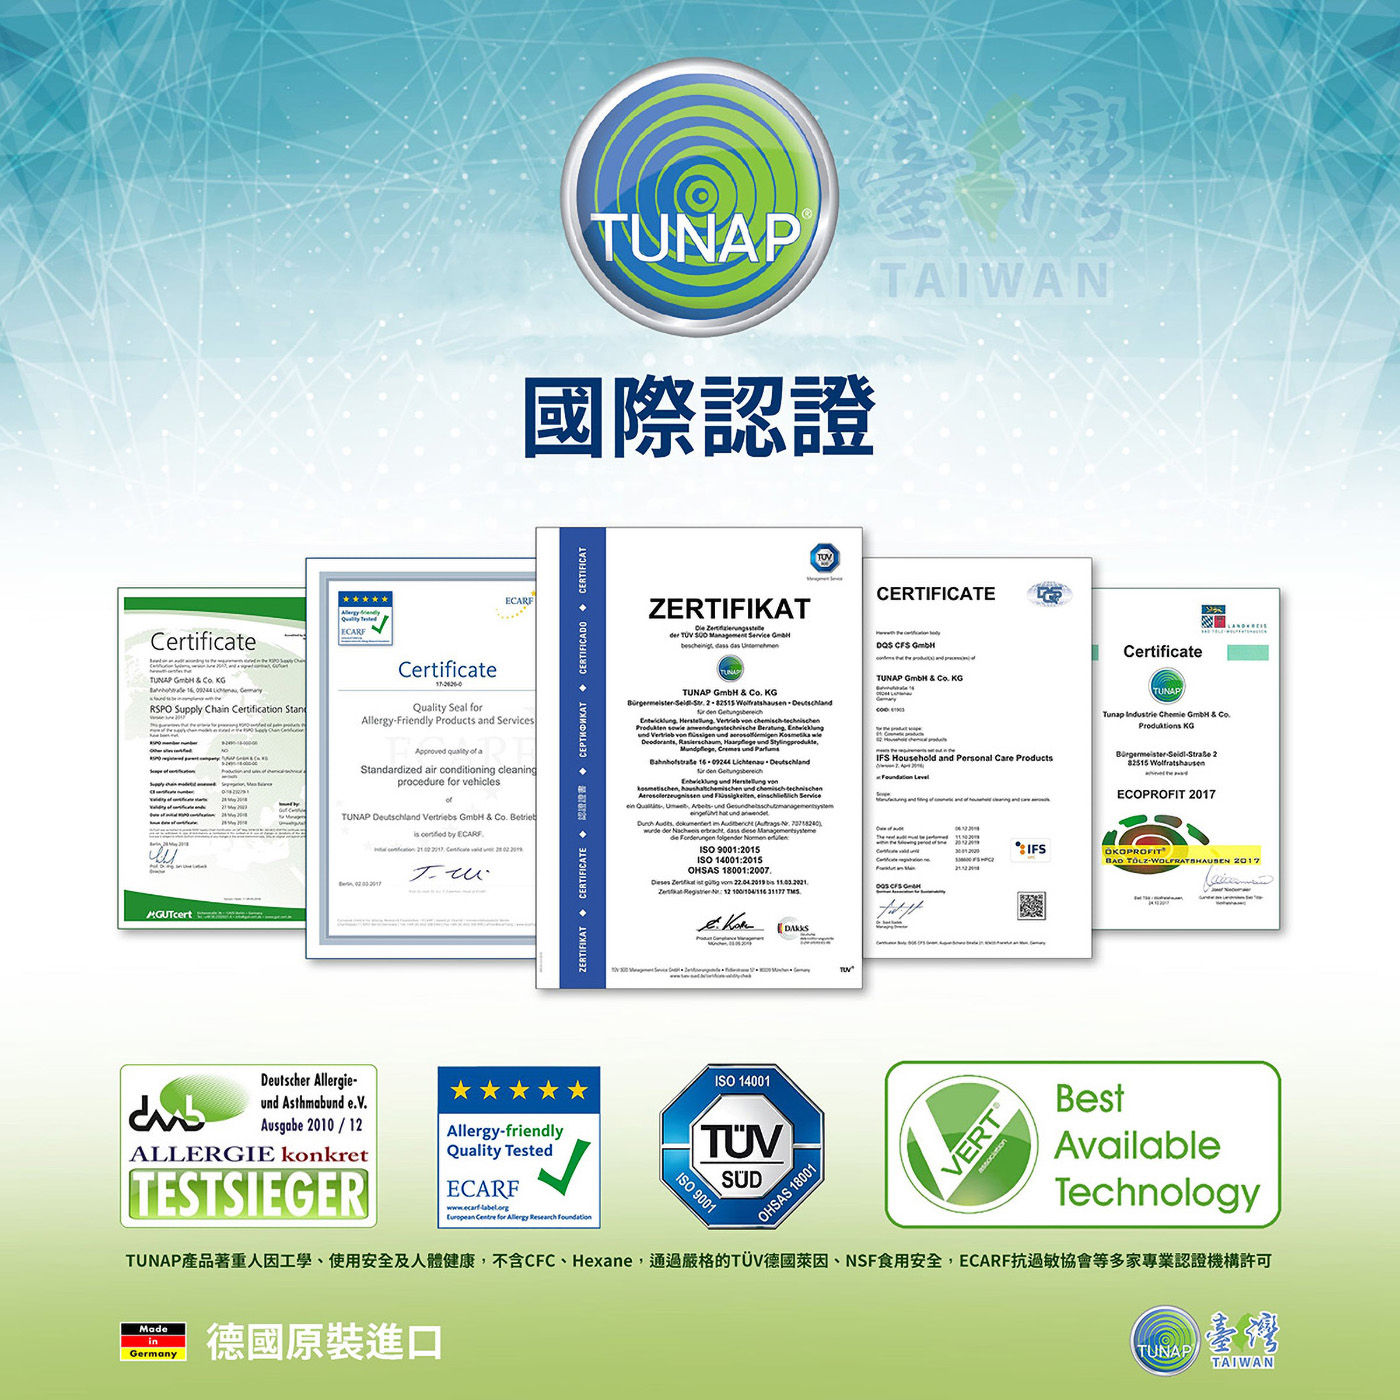 Tunap 587 內裝異味吸收噴霧國際認證品牌銷售網遍及歐洲歐系車廠長期指定品牌代工商品供應商